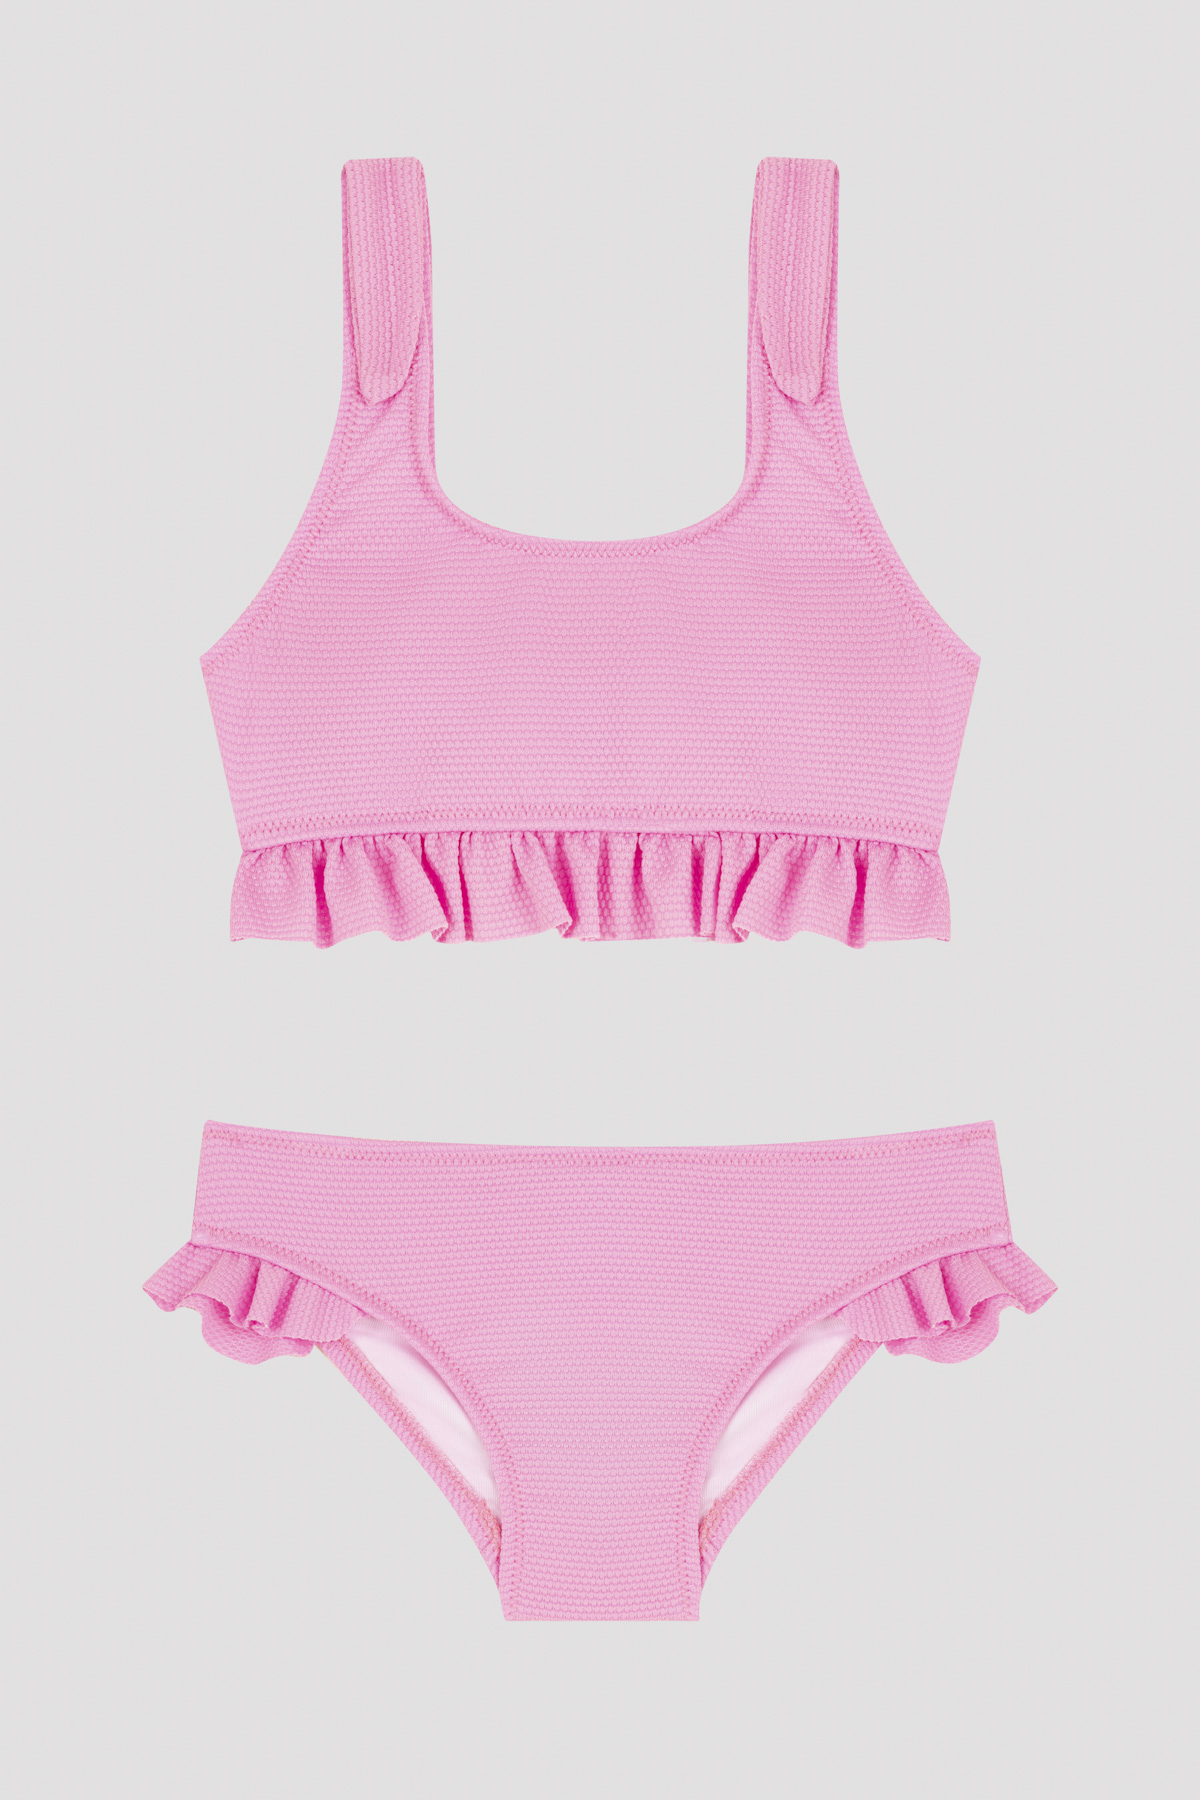 Penti Pink Teen Cute Halter Bikini Set. 1